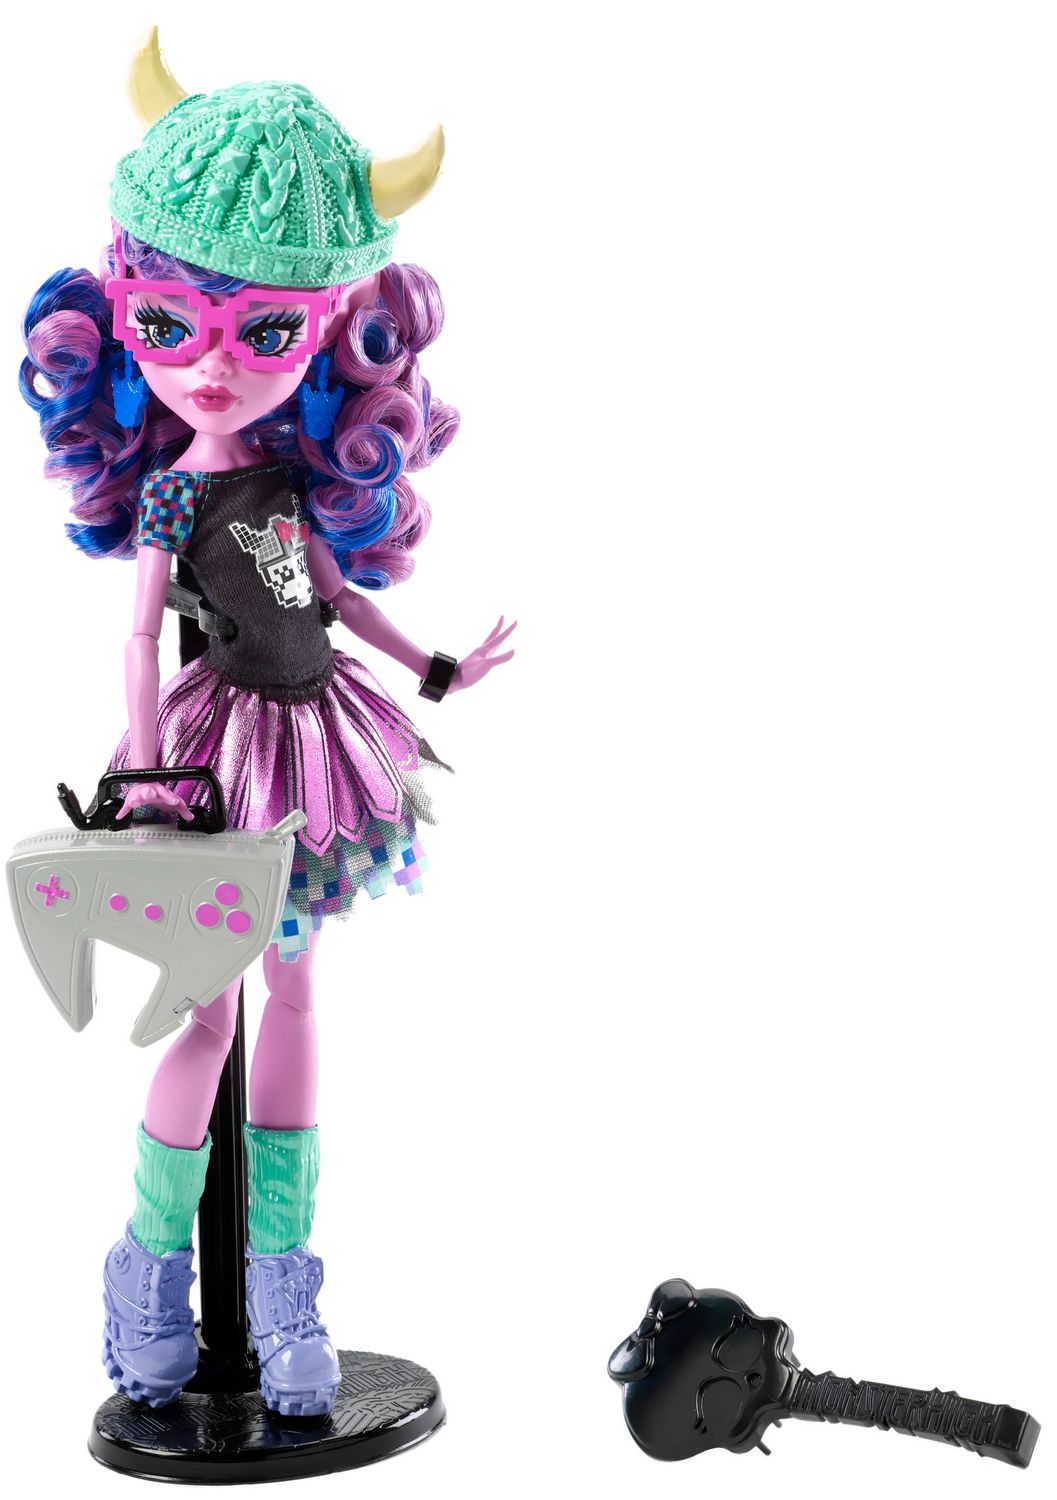 Polly Pocket Monster High Compact? : r/MonsterHigh